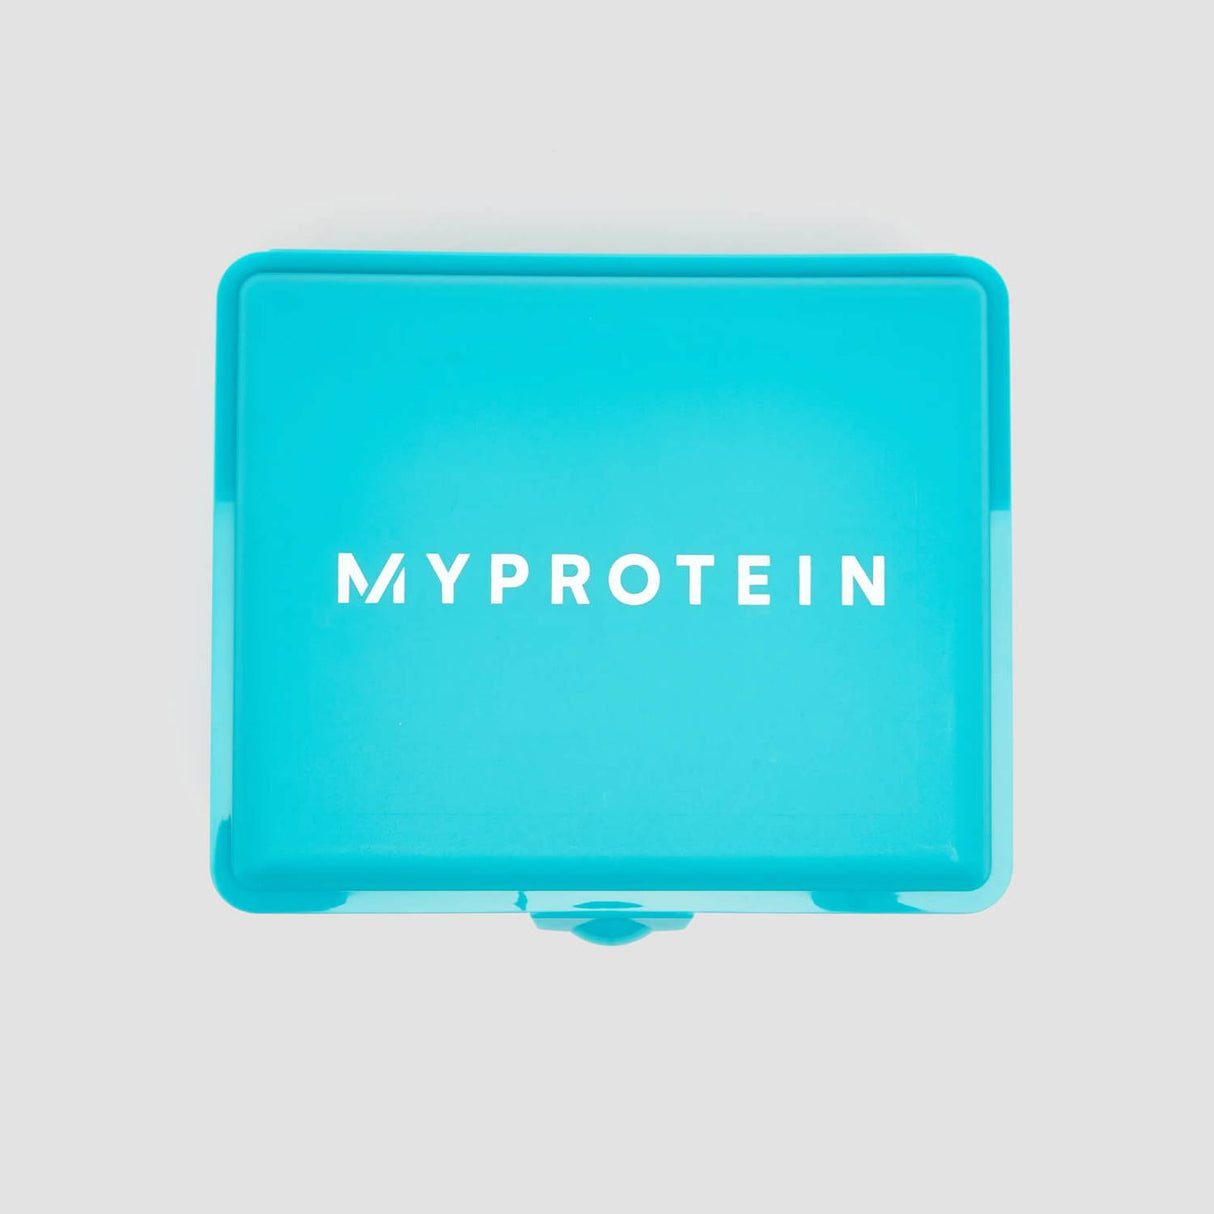 Myprotein Large Klick Box / Container